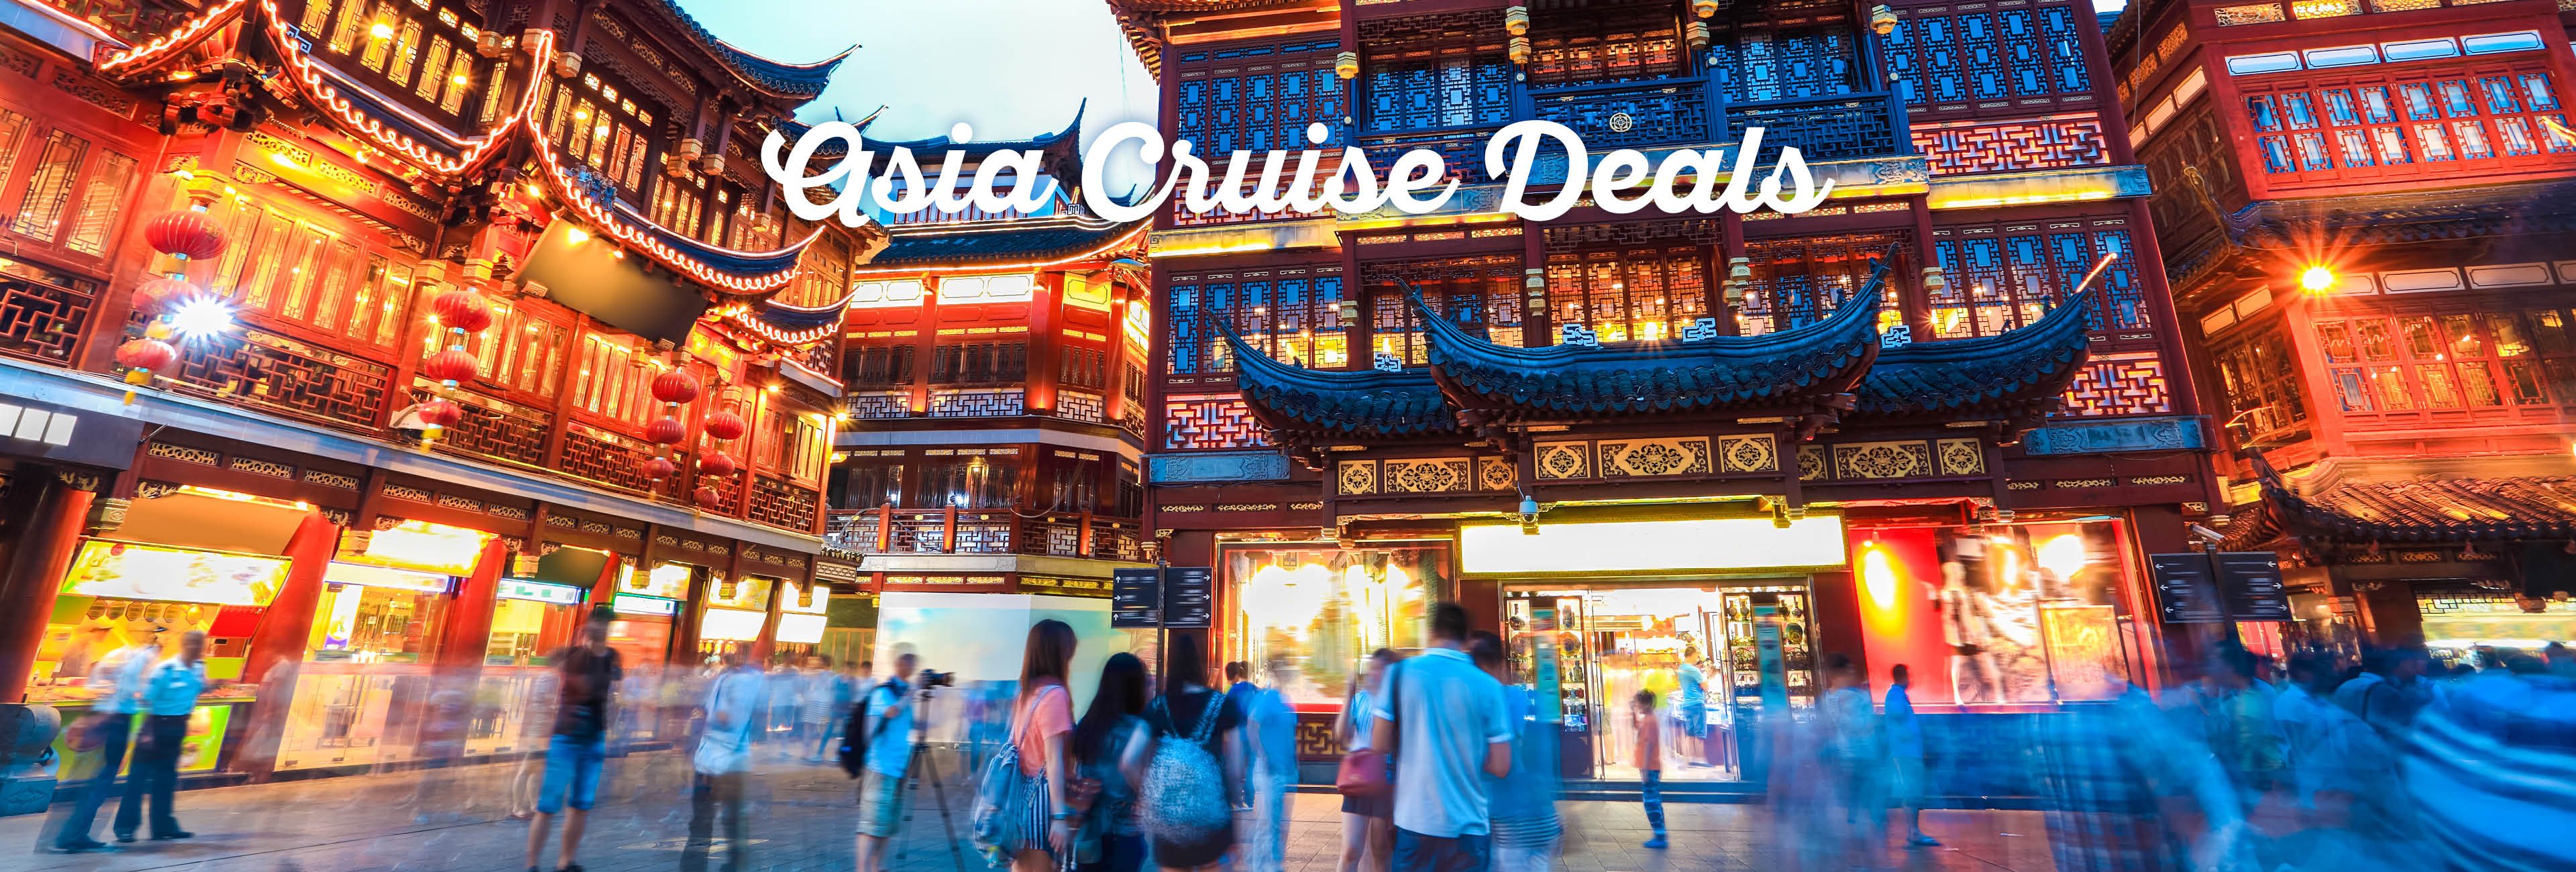 asia-cruise-deals1.jpg